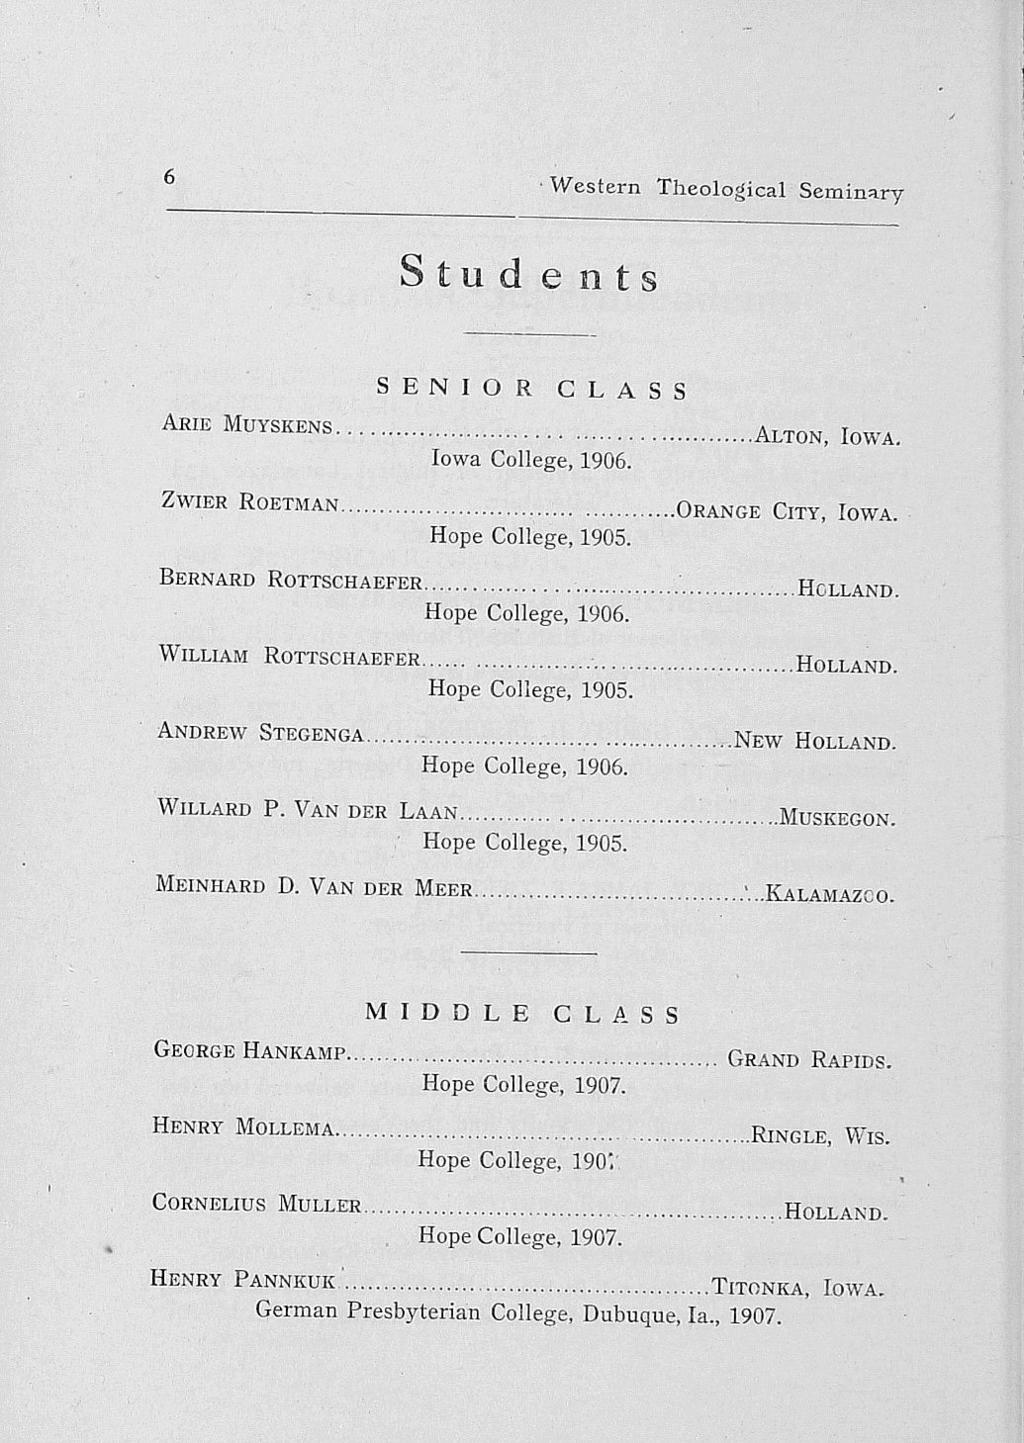 Western Theological Seminary Stud e ots Arie Muyskens... SENIOR CLASS Iowa College, 1906. ZWIER ROETMAN... Hope College, 1905....Orange City, Iowa. Bernard Rottschaefer. Hope College, 1906.